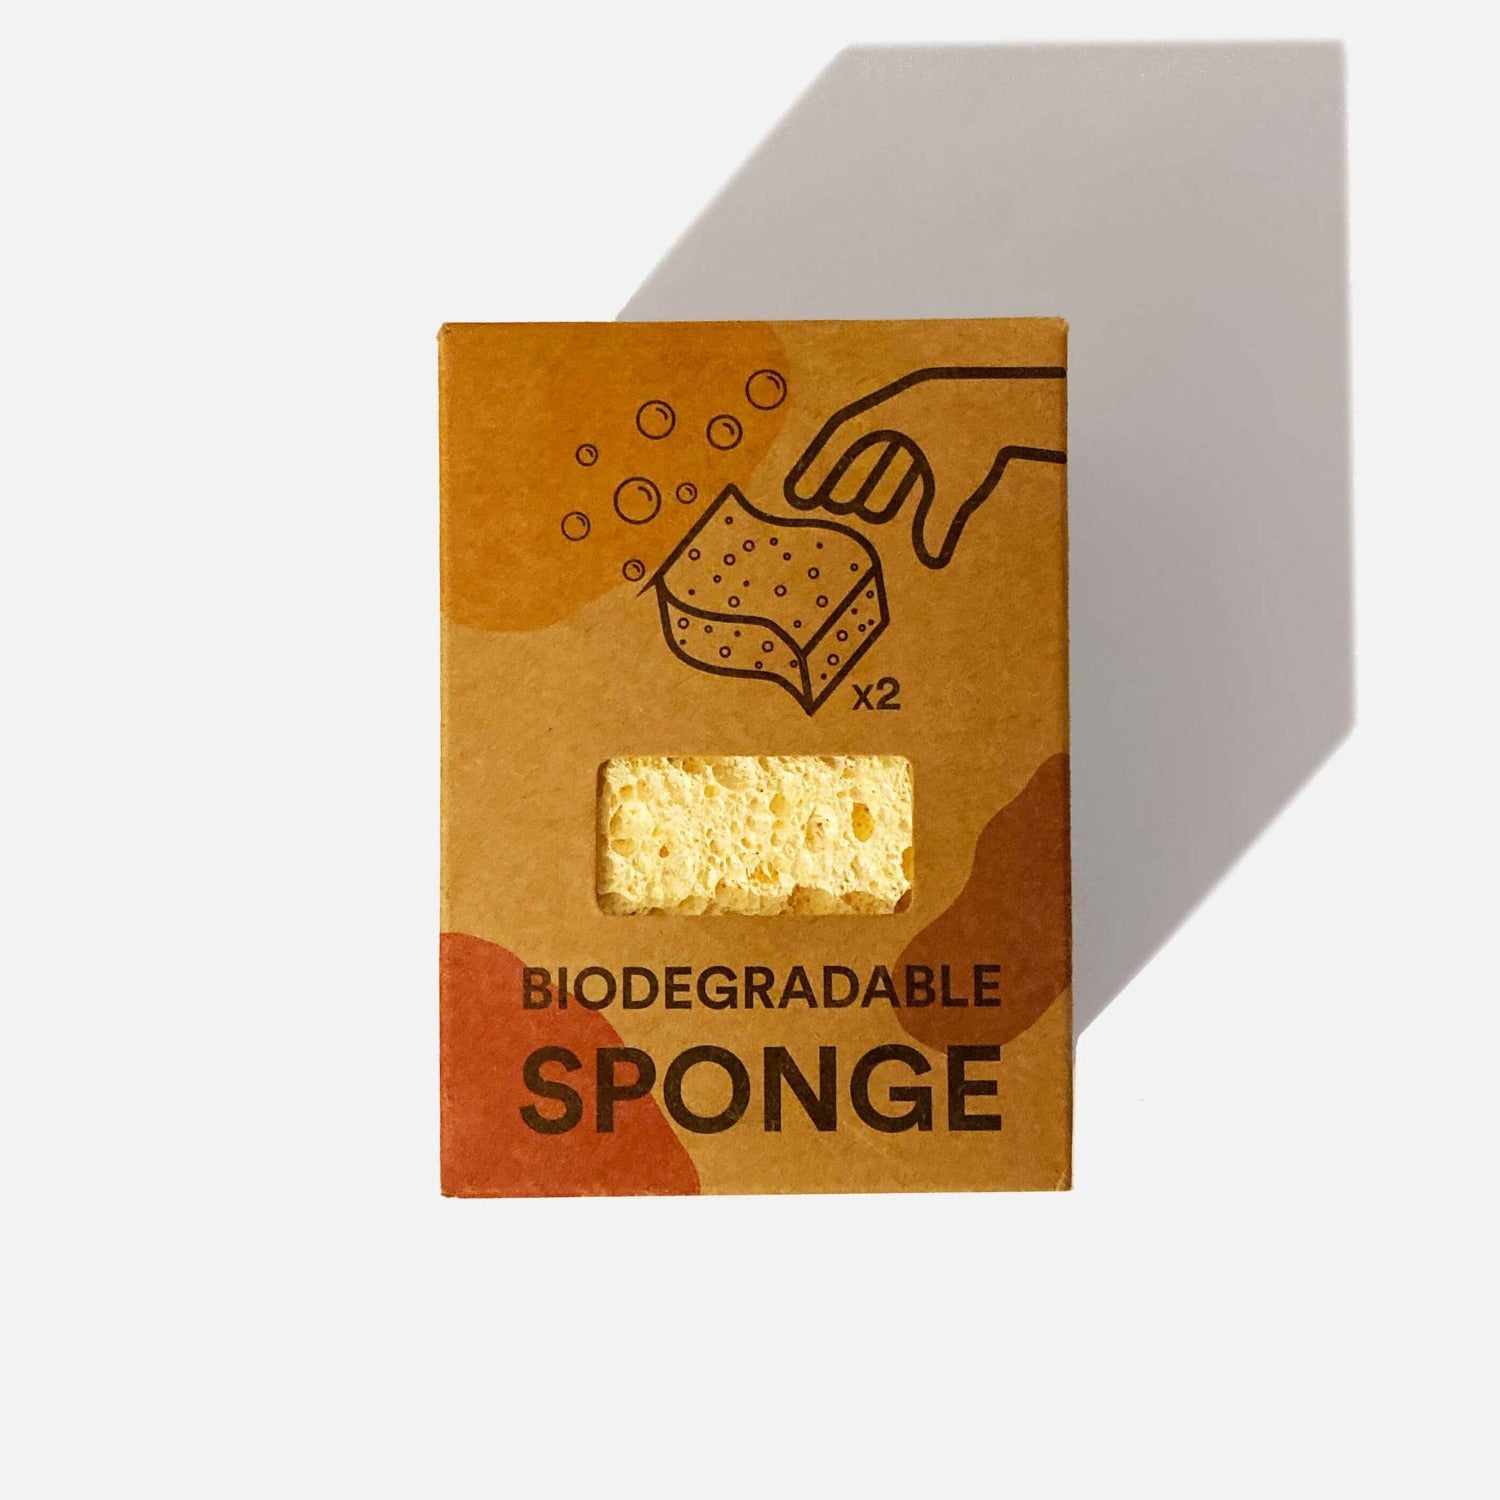 Biodegradable kitchen sponge pack of 2